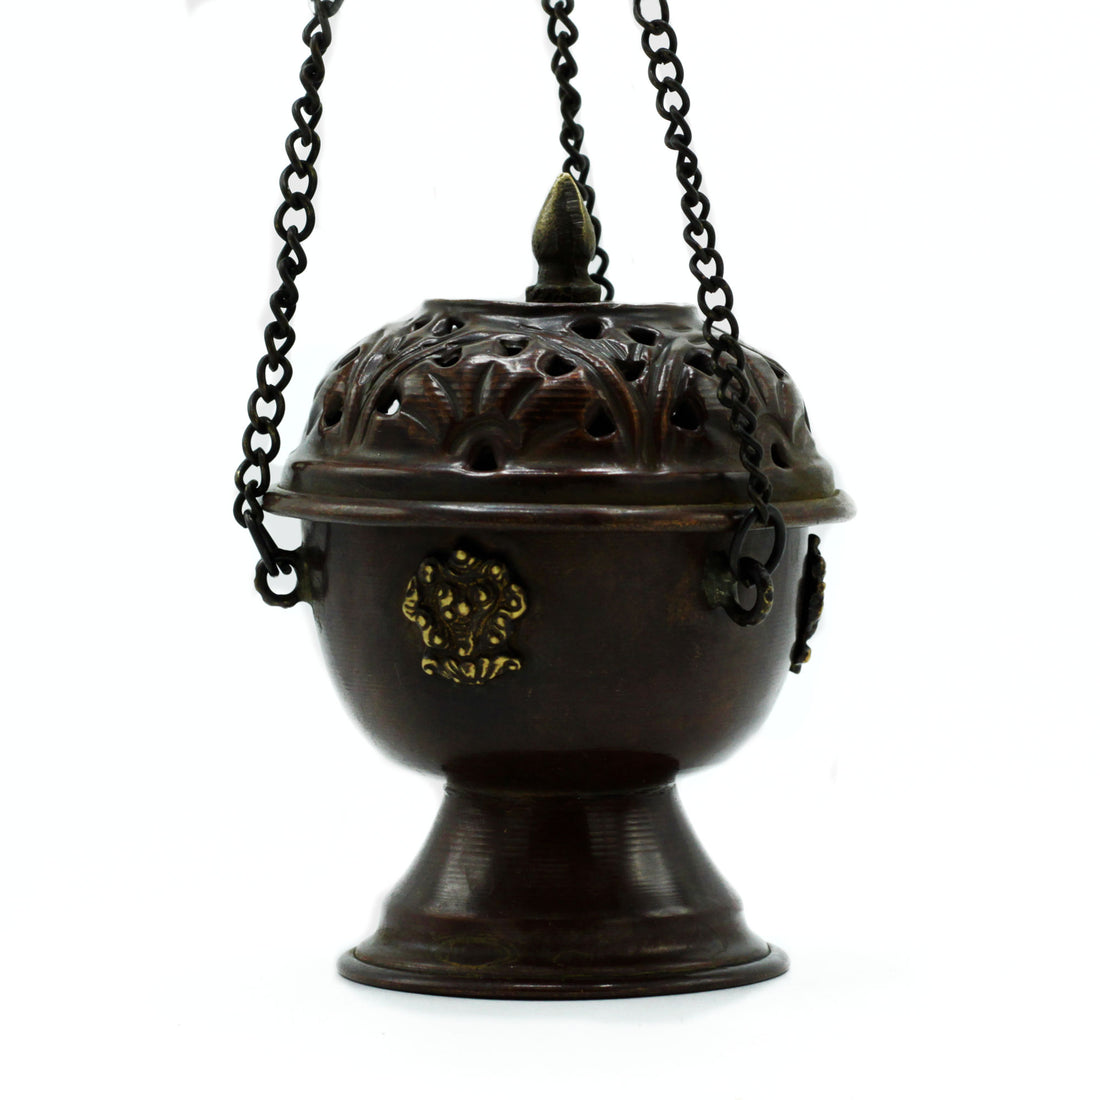 Copper Tibetan Incense Burner - Classic Hanging